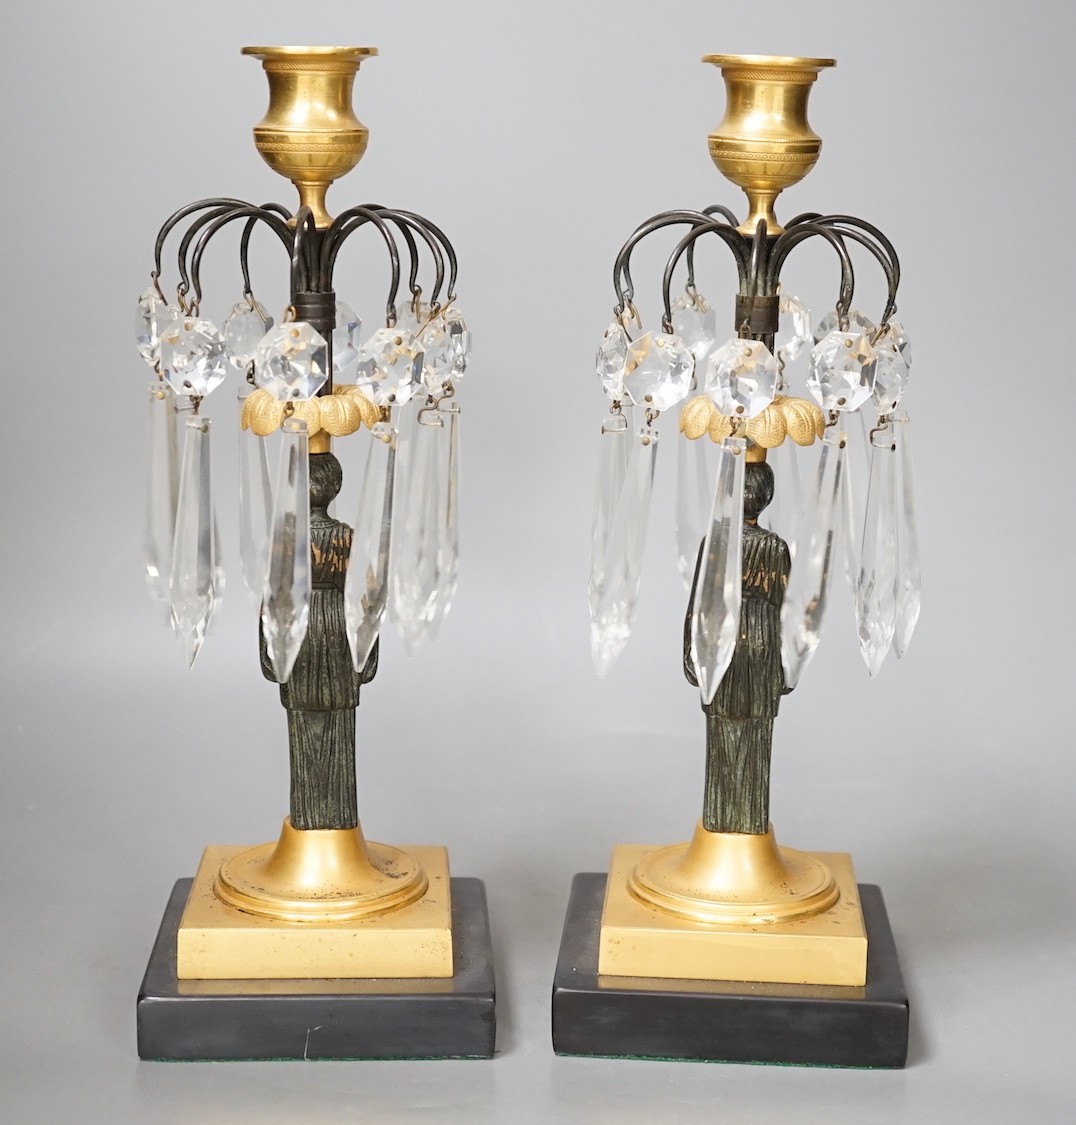 A pair of figural lustre drop candlesticks - 29cm tall